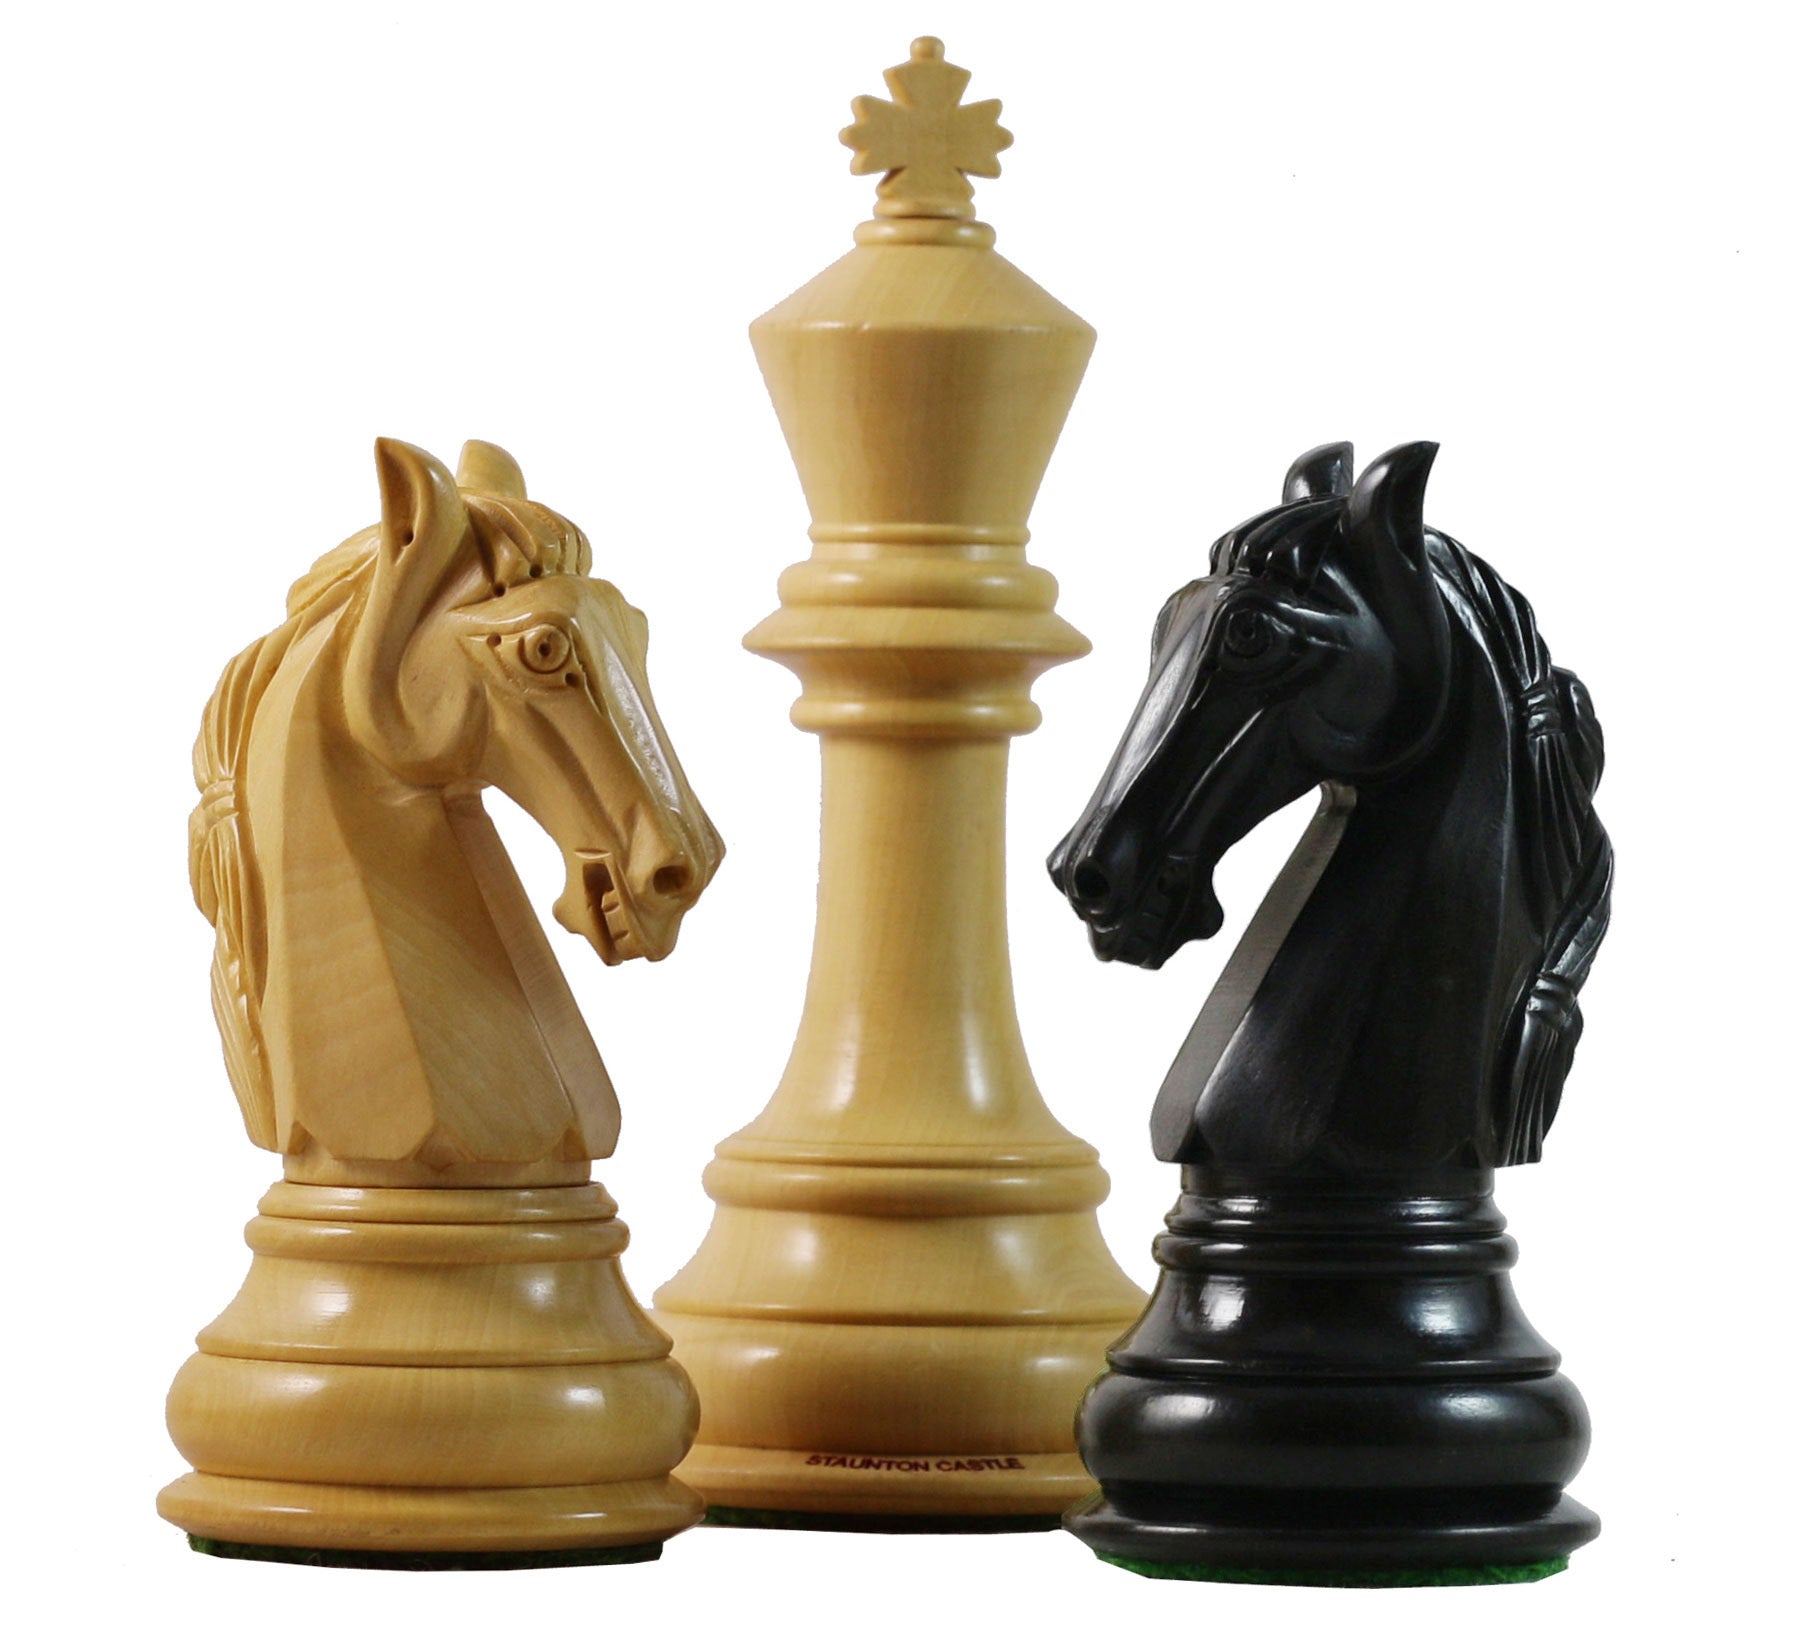 Columbian Series 4.5" Premium Staunton Chess Set in Ebony and Box Wood